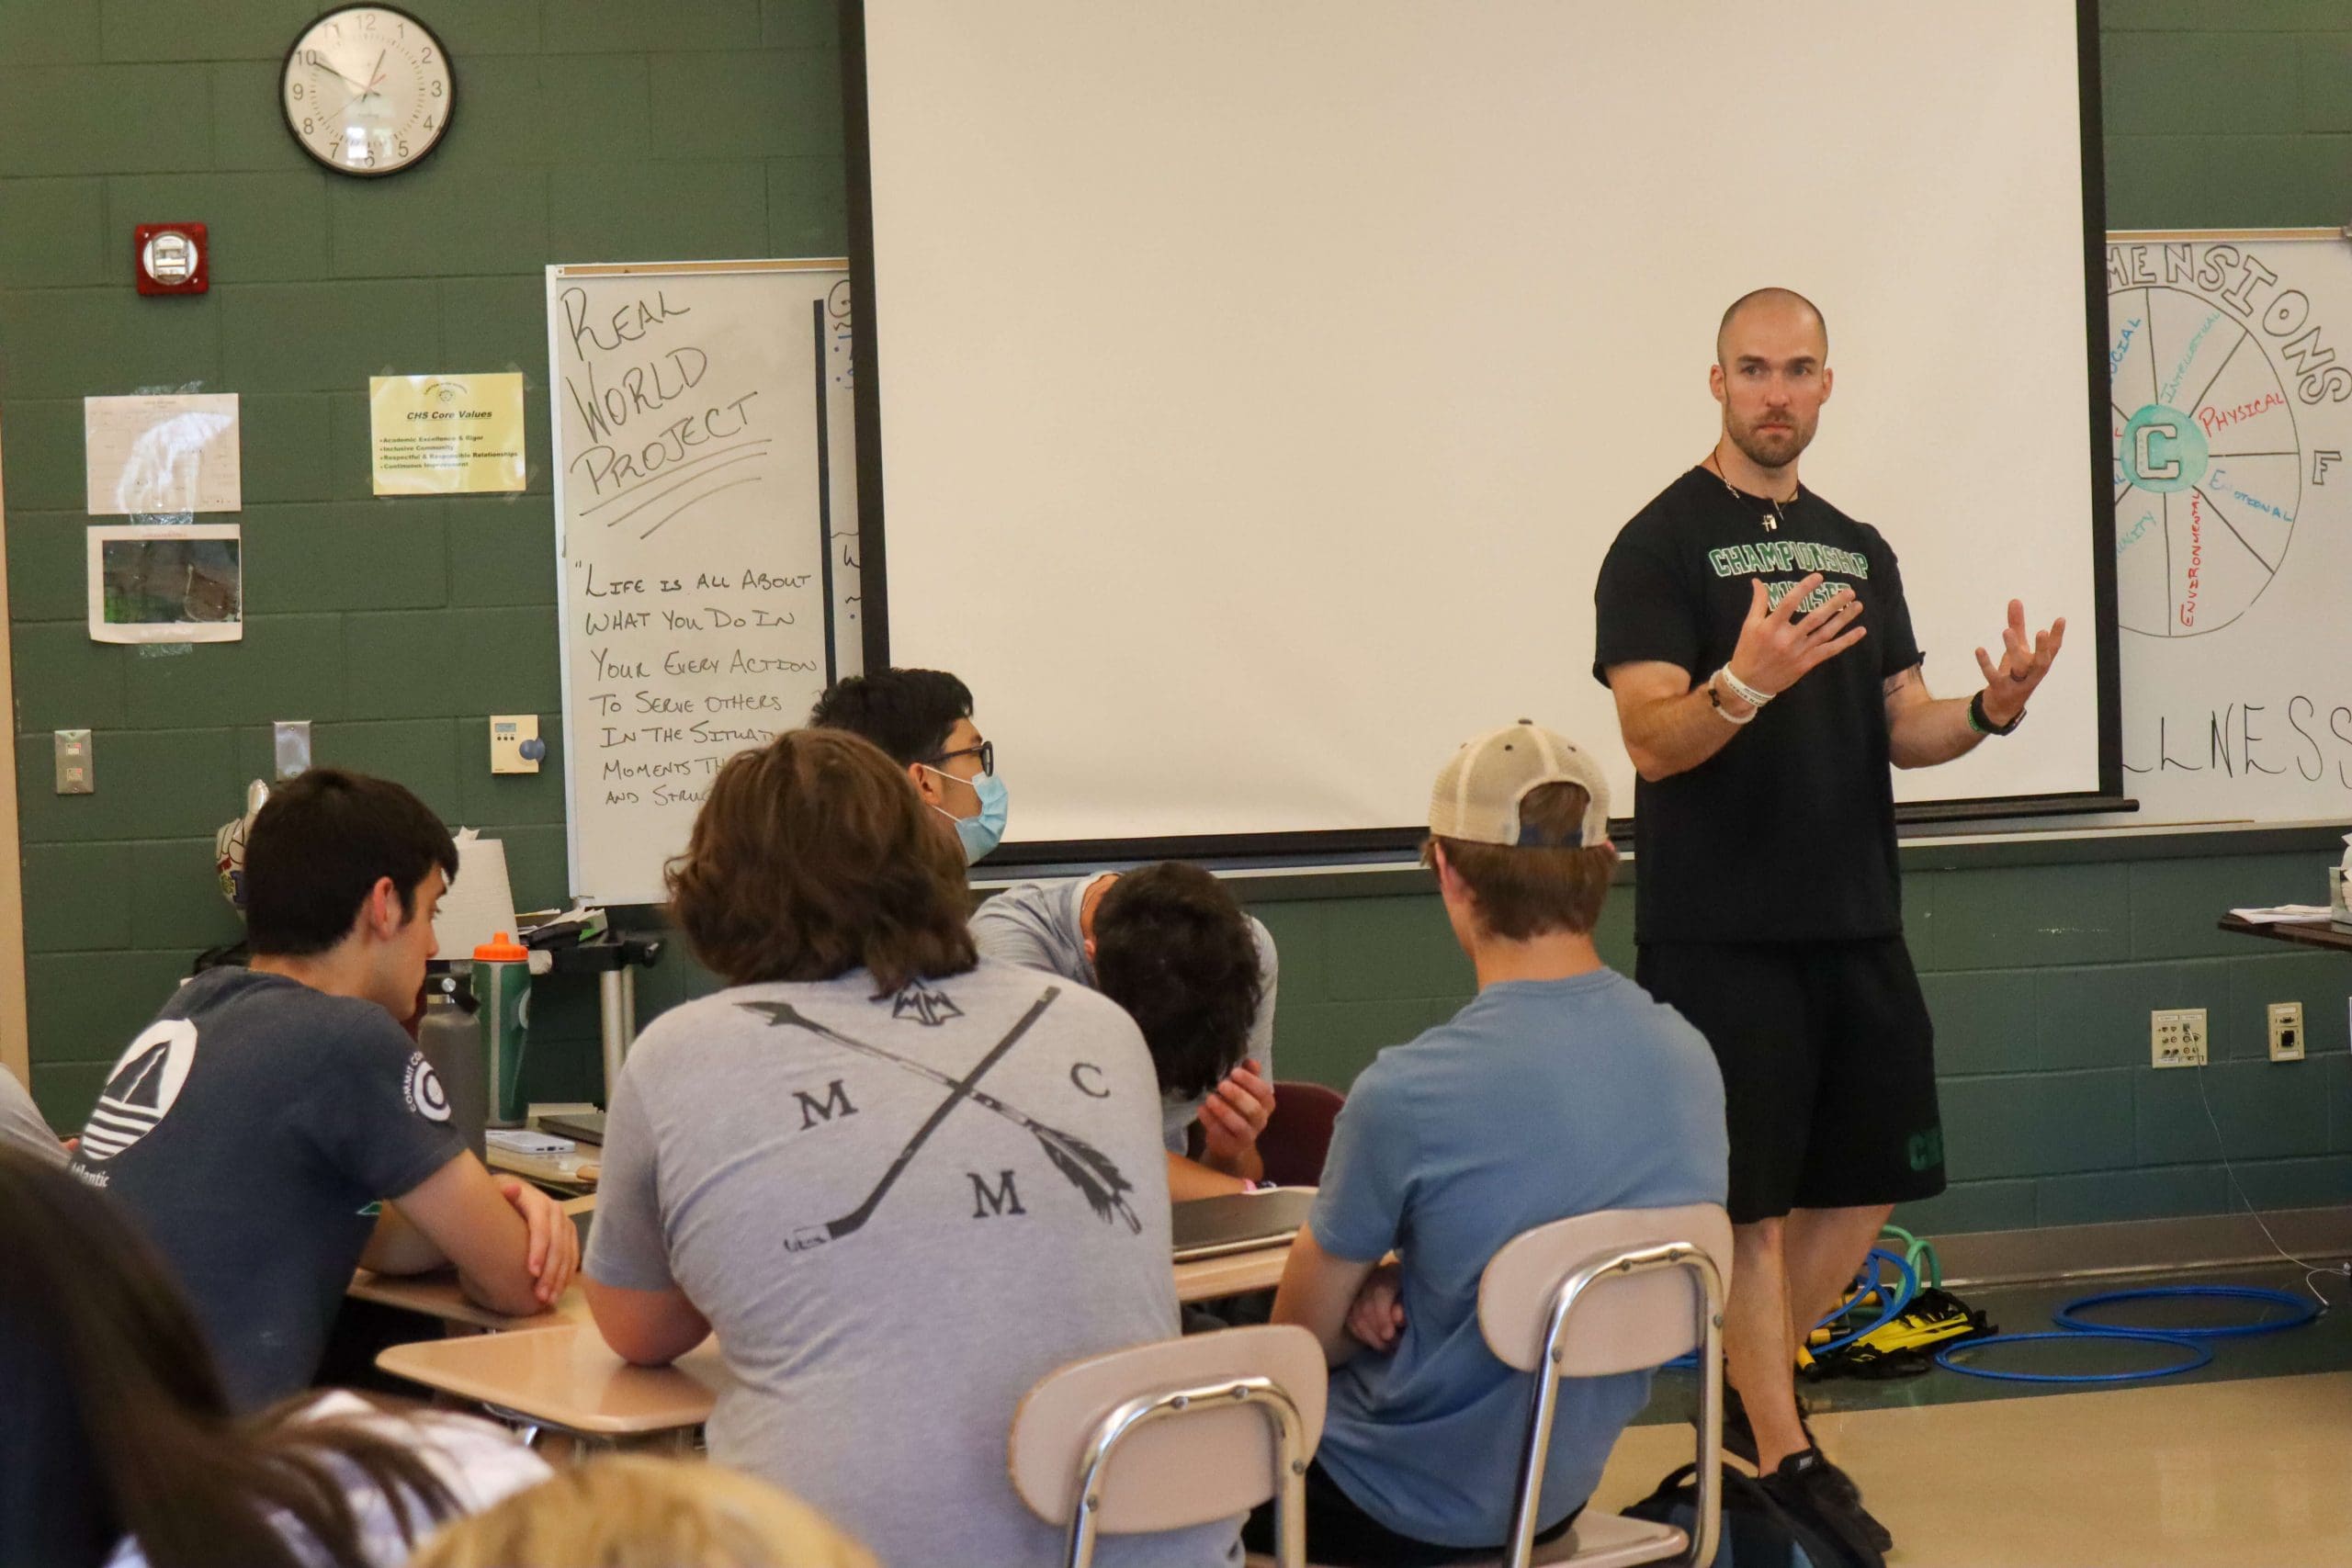 A teacher introduces a nutrition concept during a physical education class.